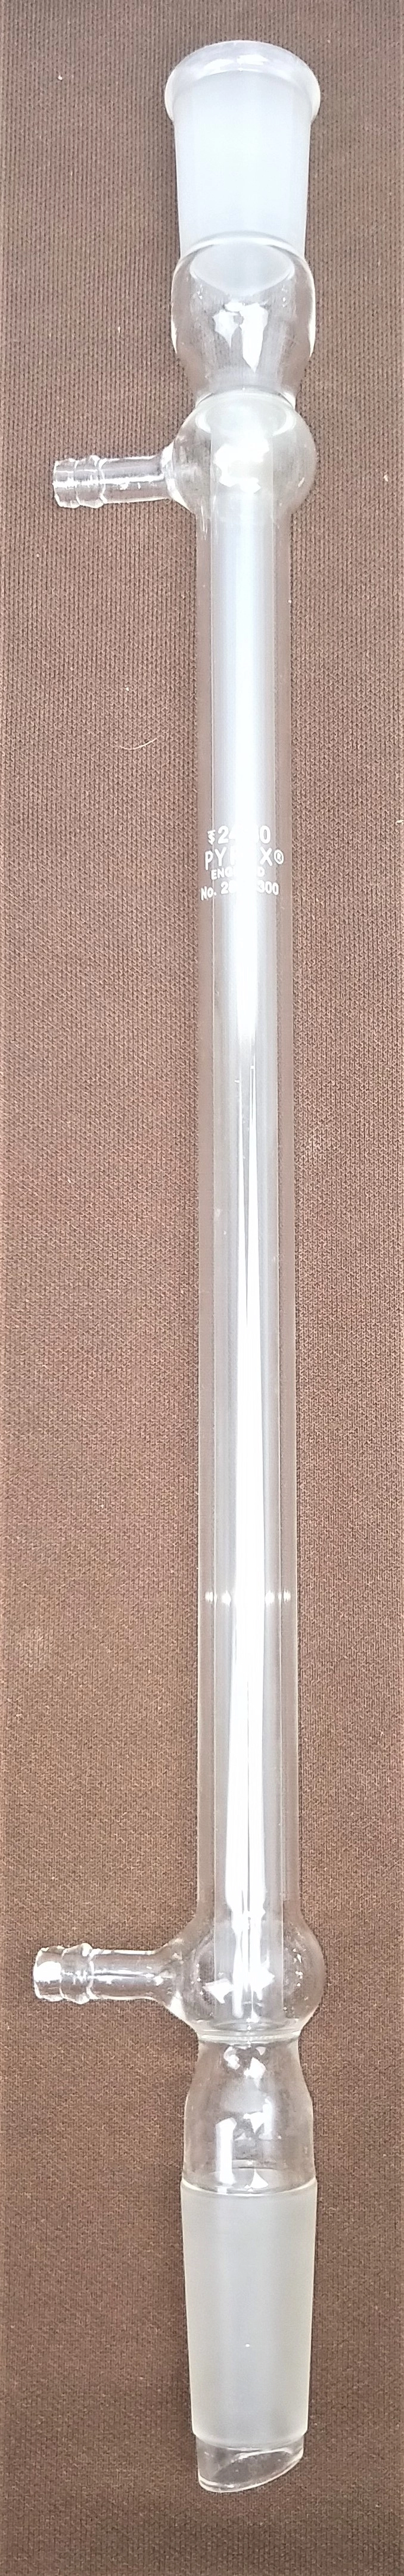 Corning PYREX 2800-300 / Kimble KIMAX 18190 Liebig-West Condenser (300mm)